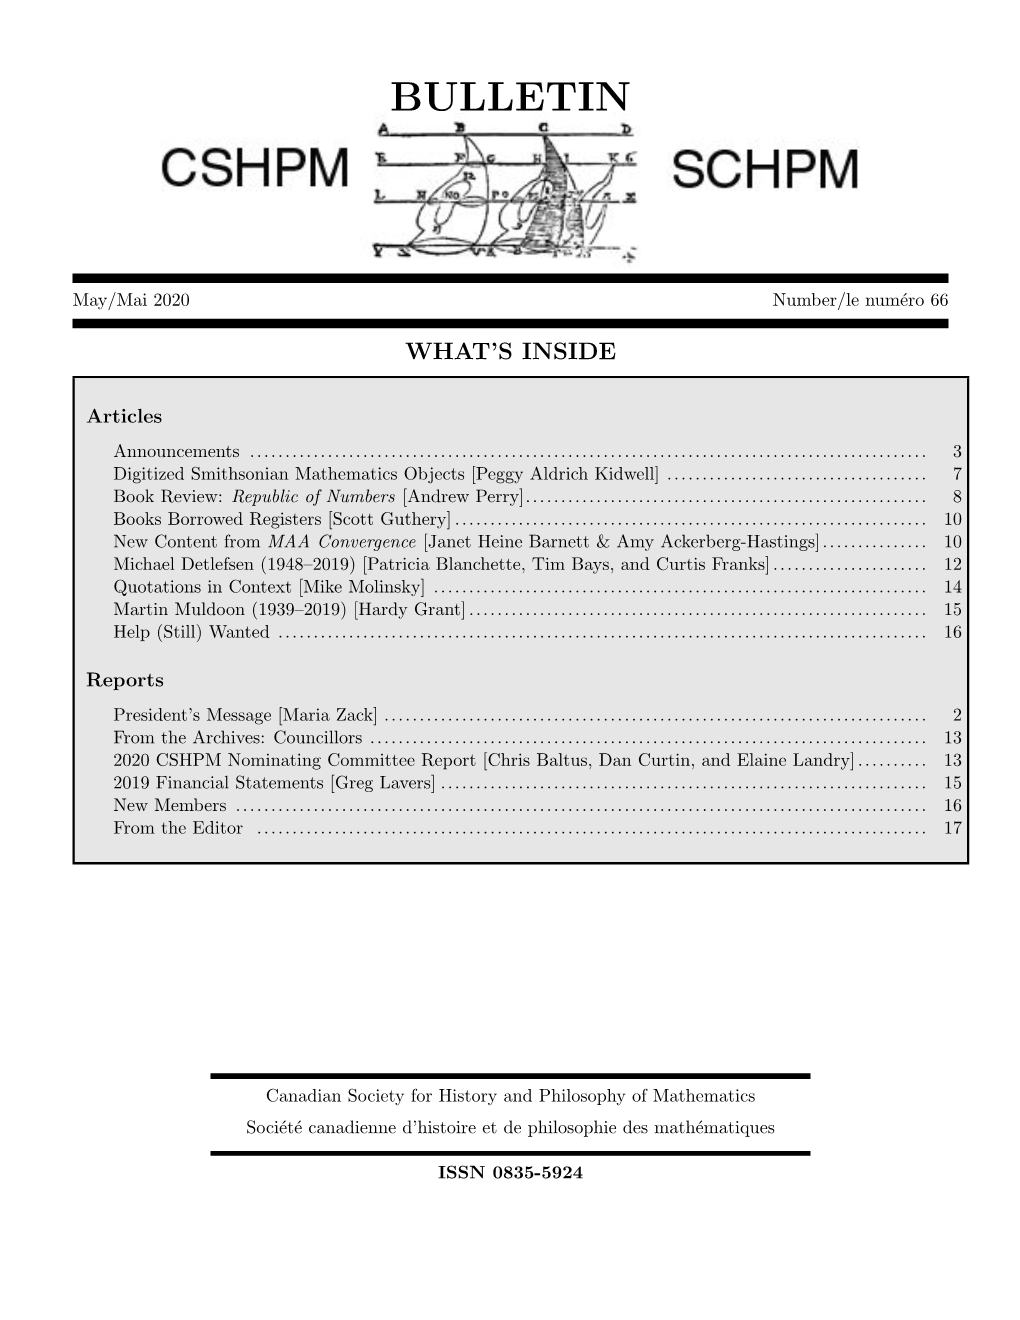 CSHPM Bulletin, May 2020